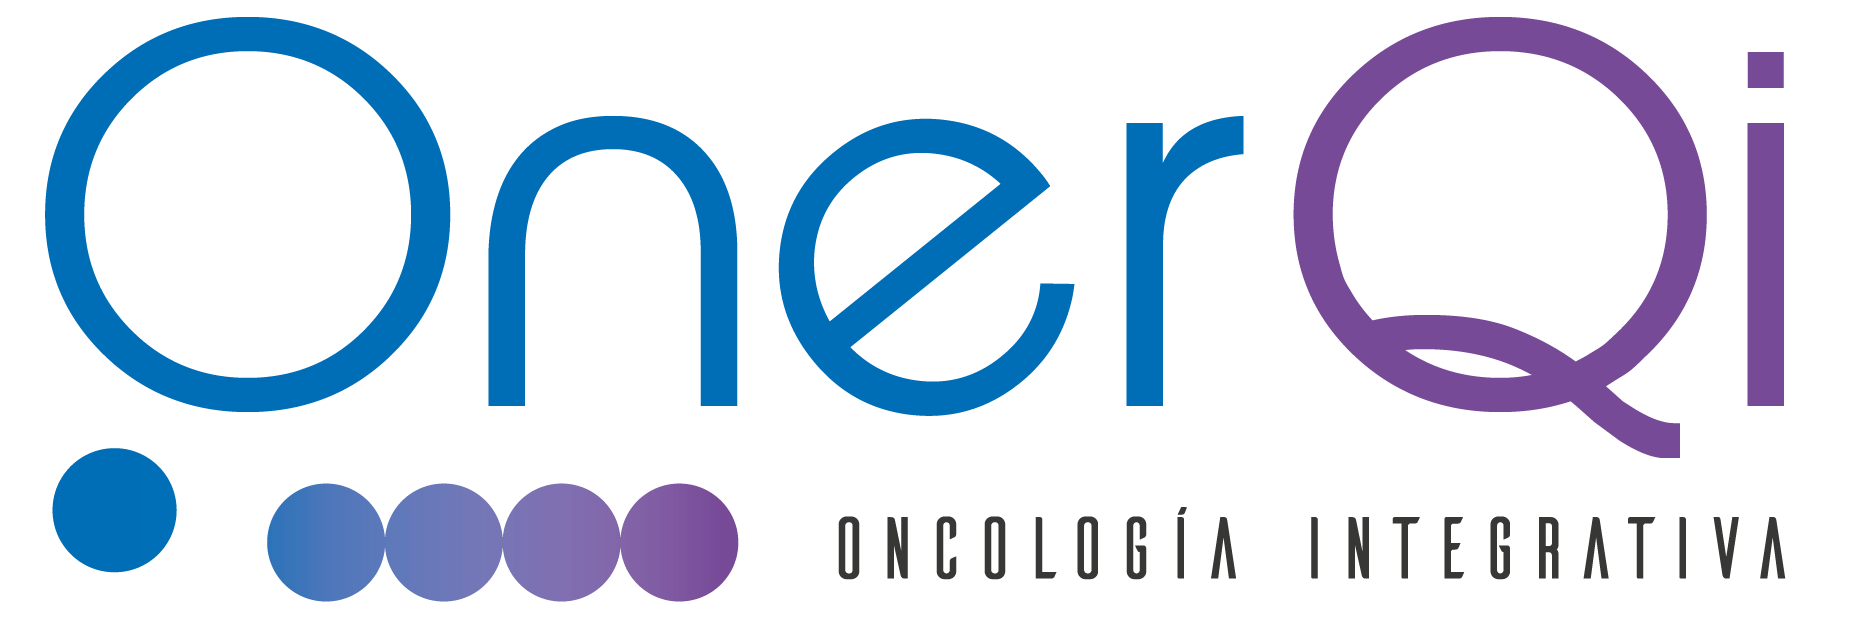 Onerqi oncologia integrativa